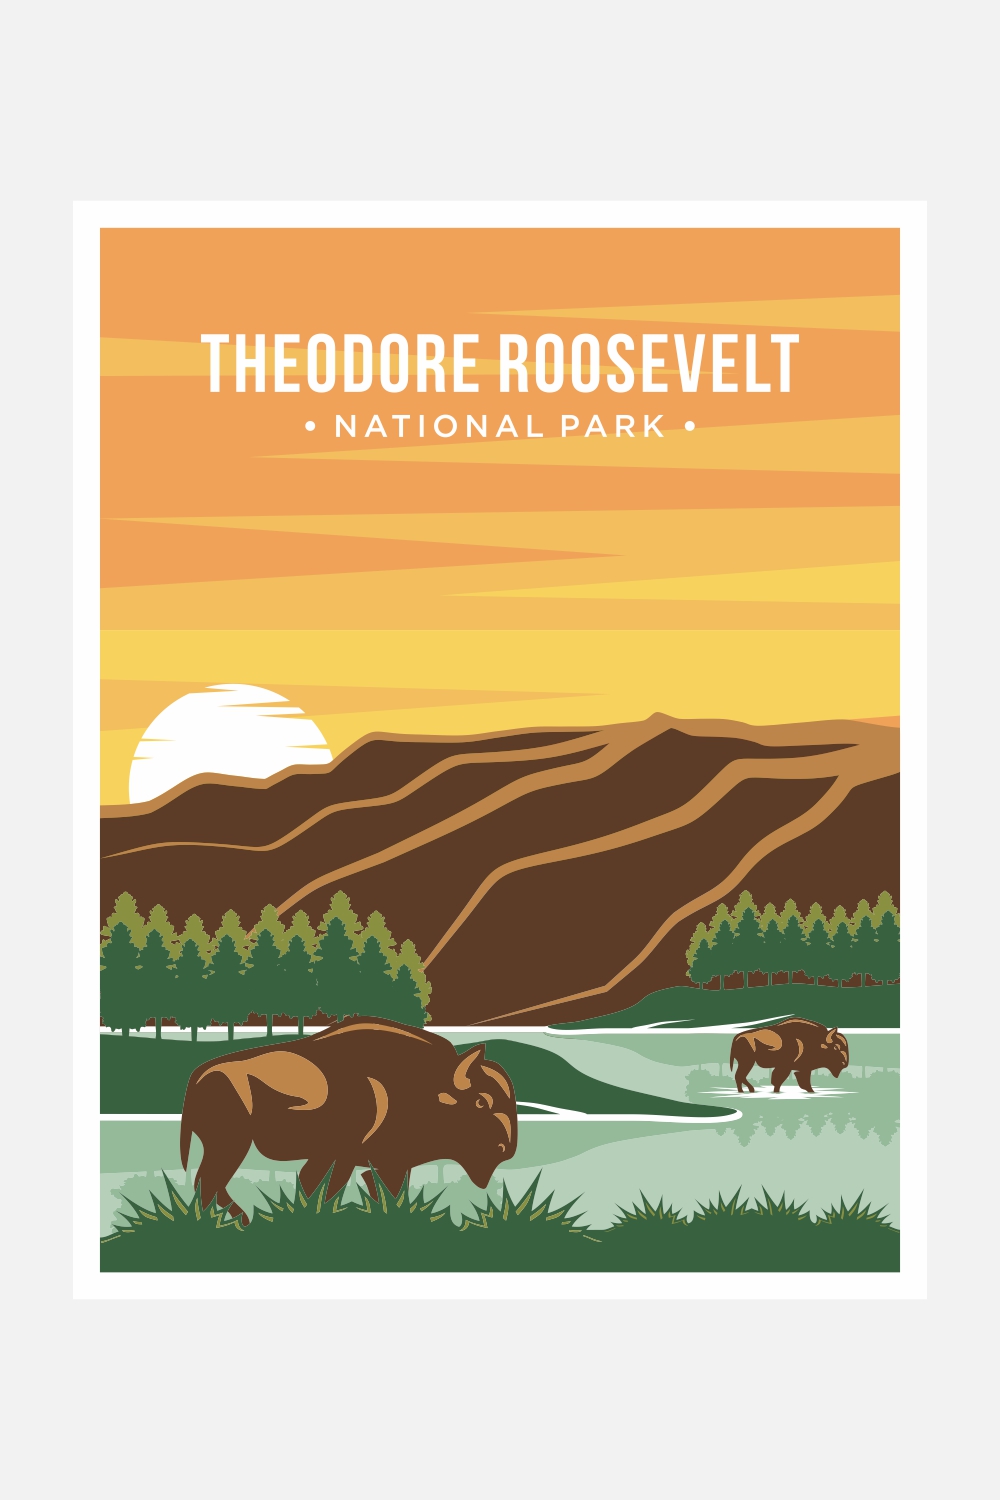 Theodore Roosevelt National Park poster vector illustration design – Only $8 pinterest preview image.